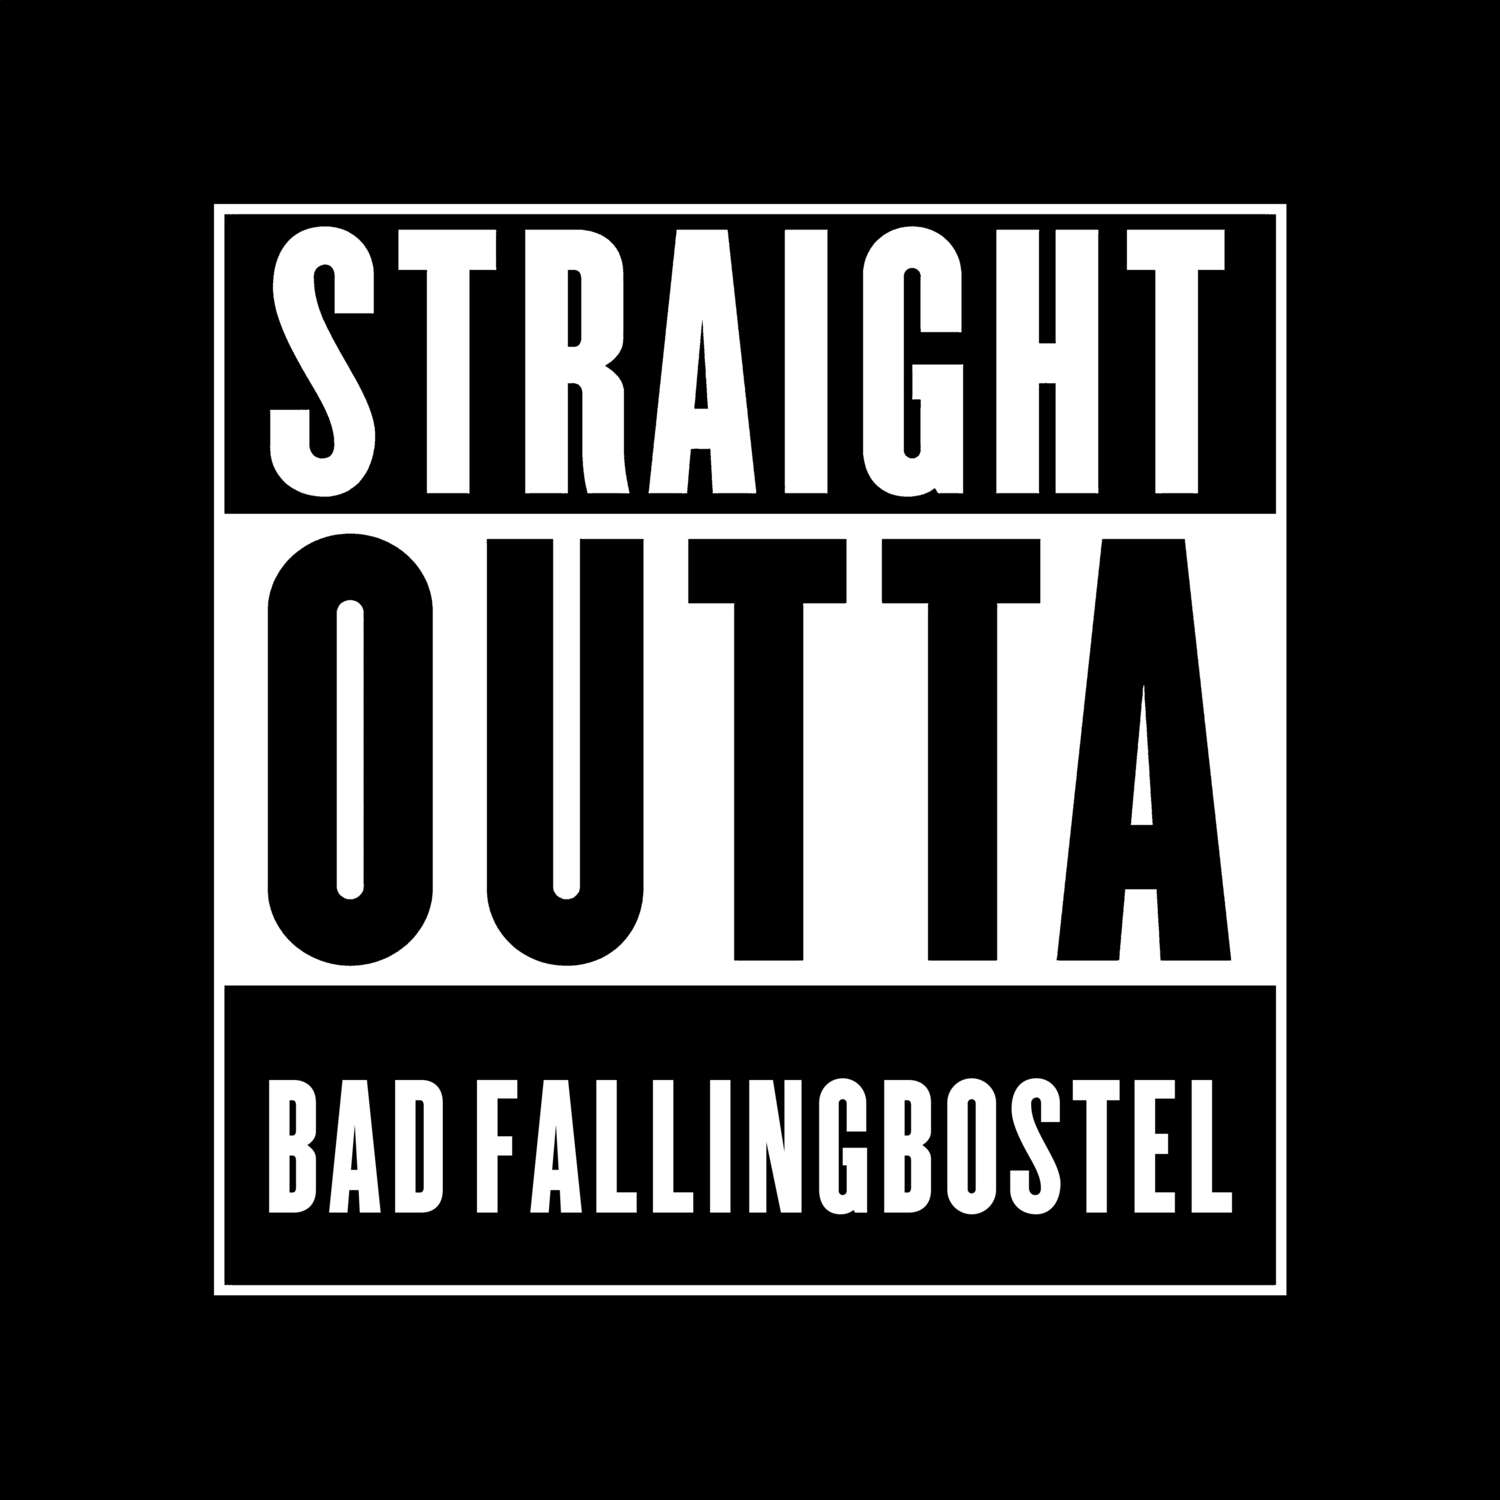 Bad Fallingbostel T-Shirt »Straight Outta«